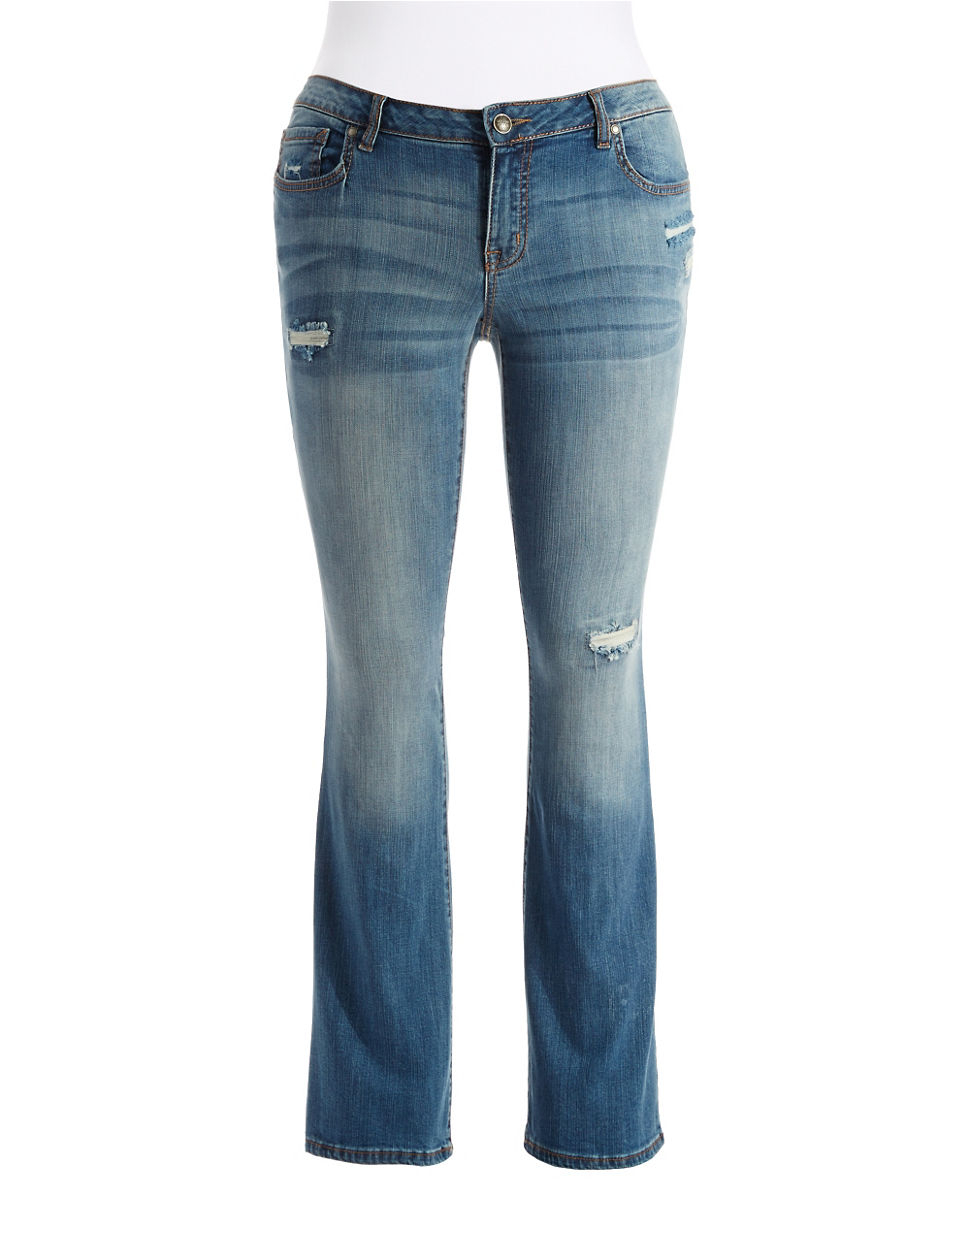 Jessica Simpson Plus Rockin Curvy Bootcut Jeans in Blue - Lyst